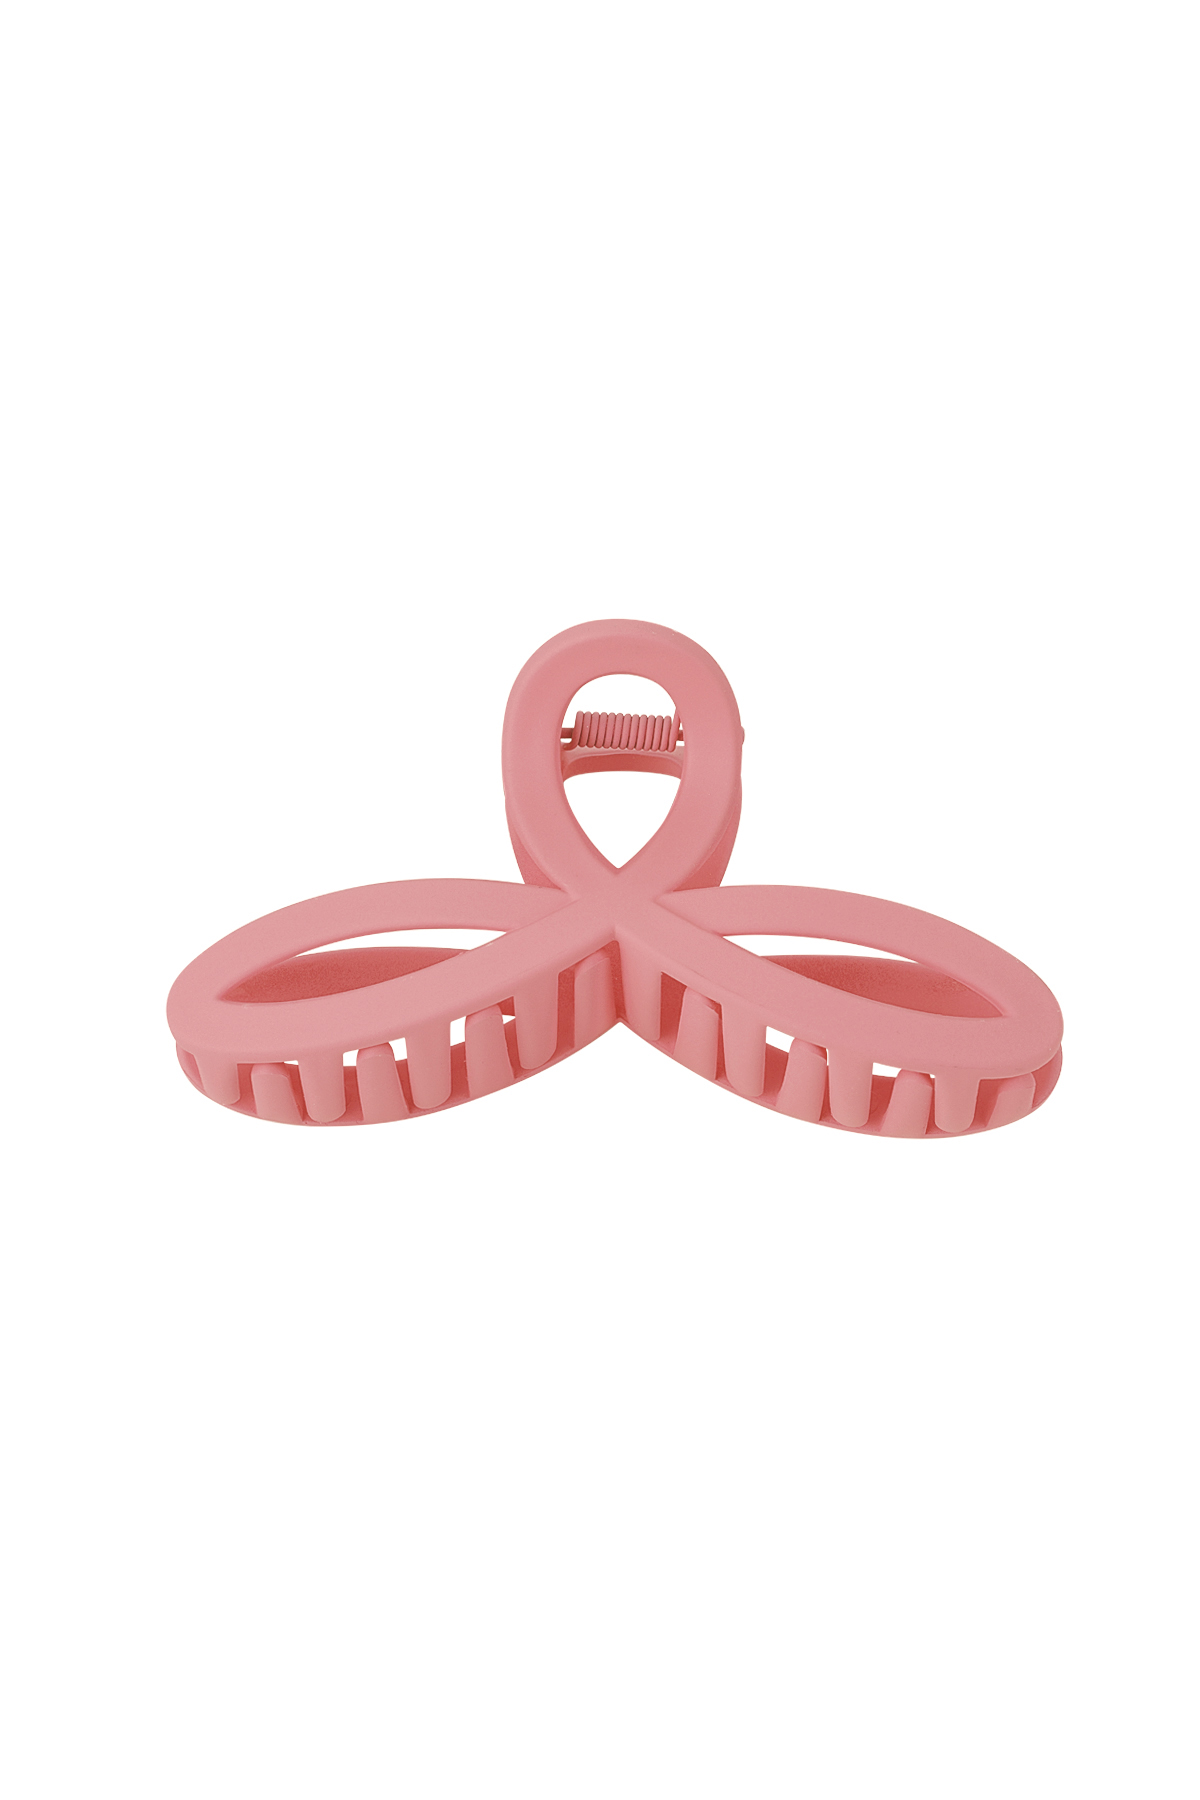 Hair clip cheerful - pink Plastic 